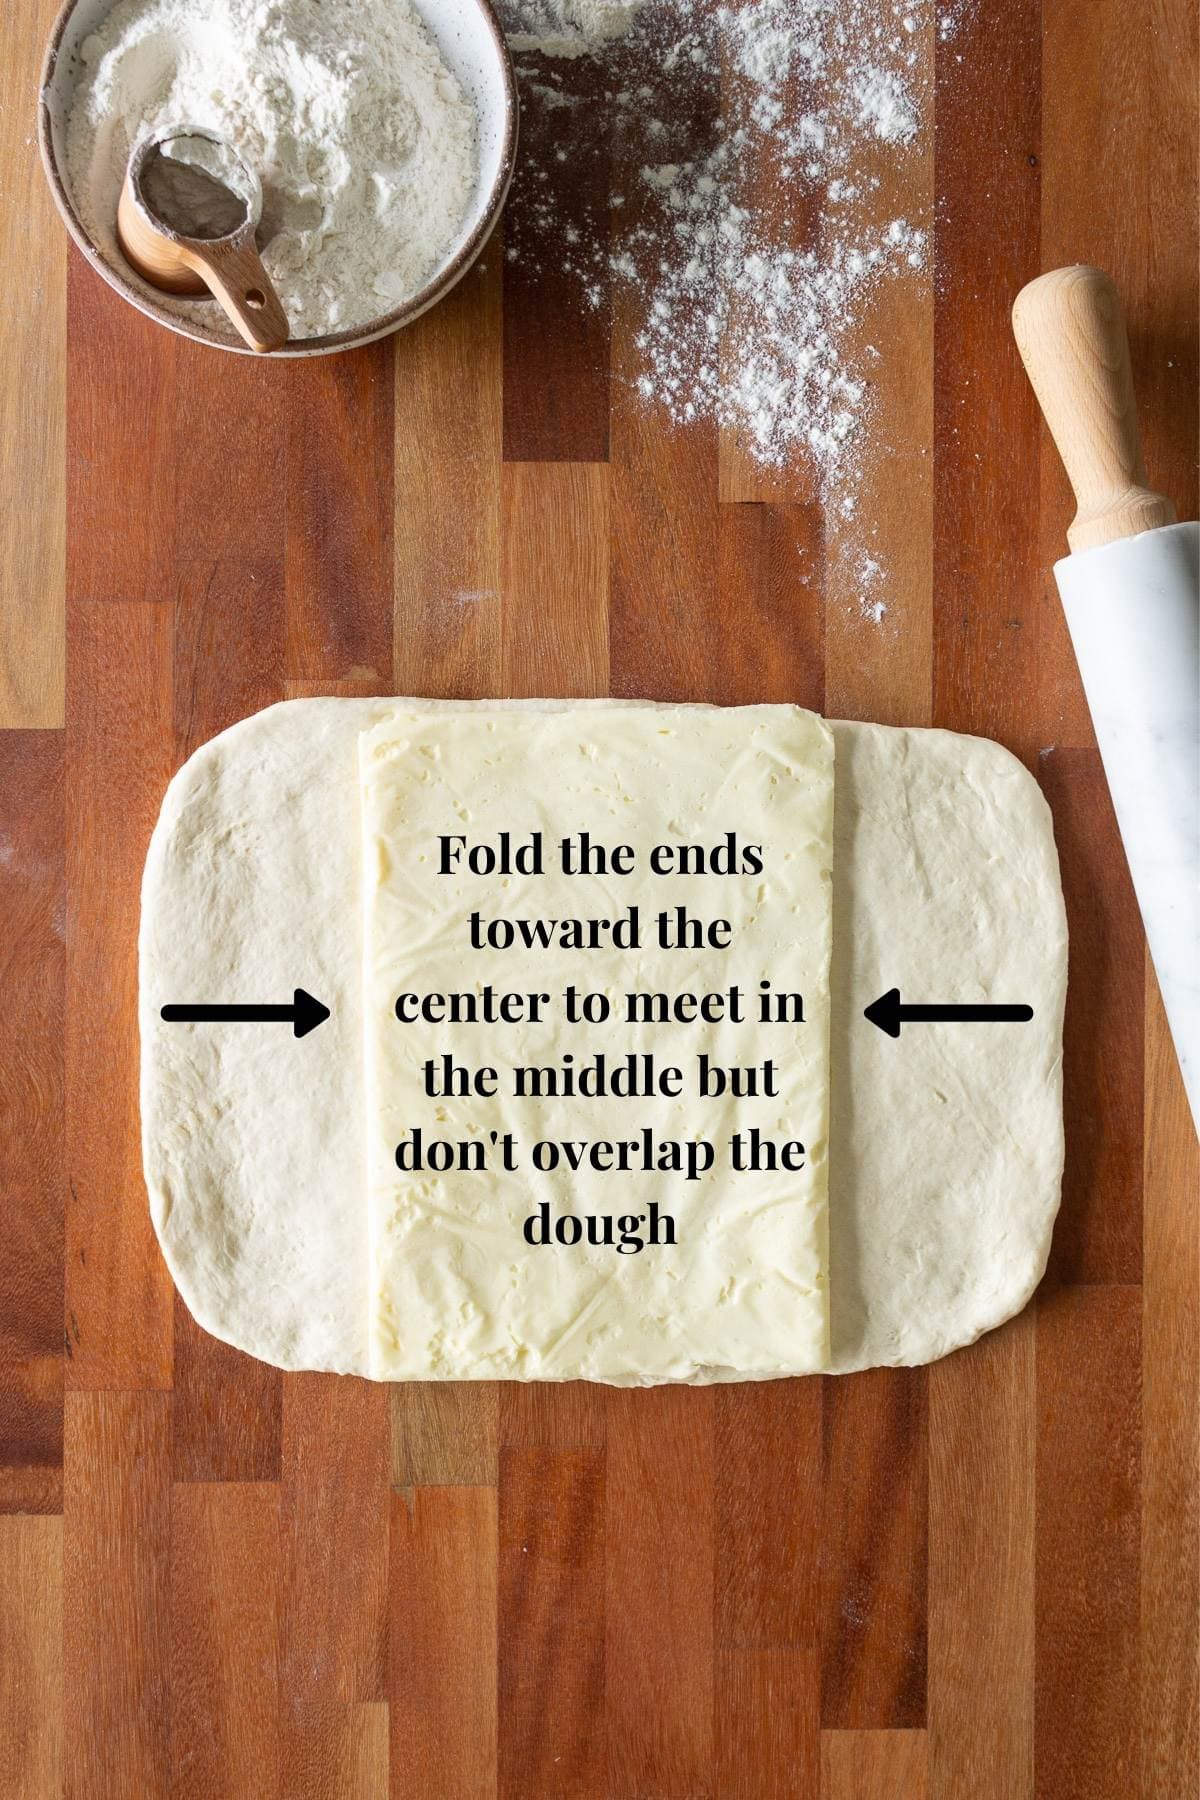 Butter block folded into croissant dough